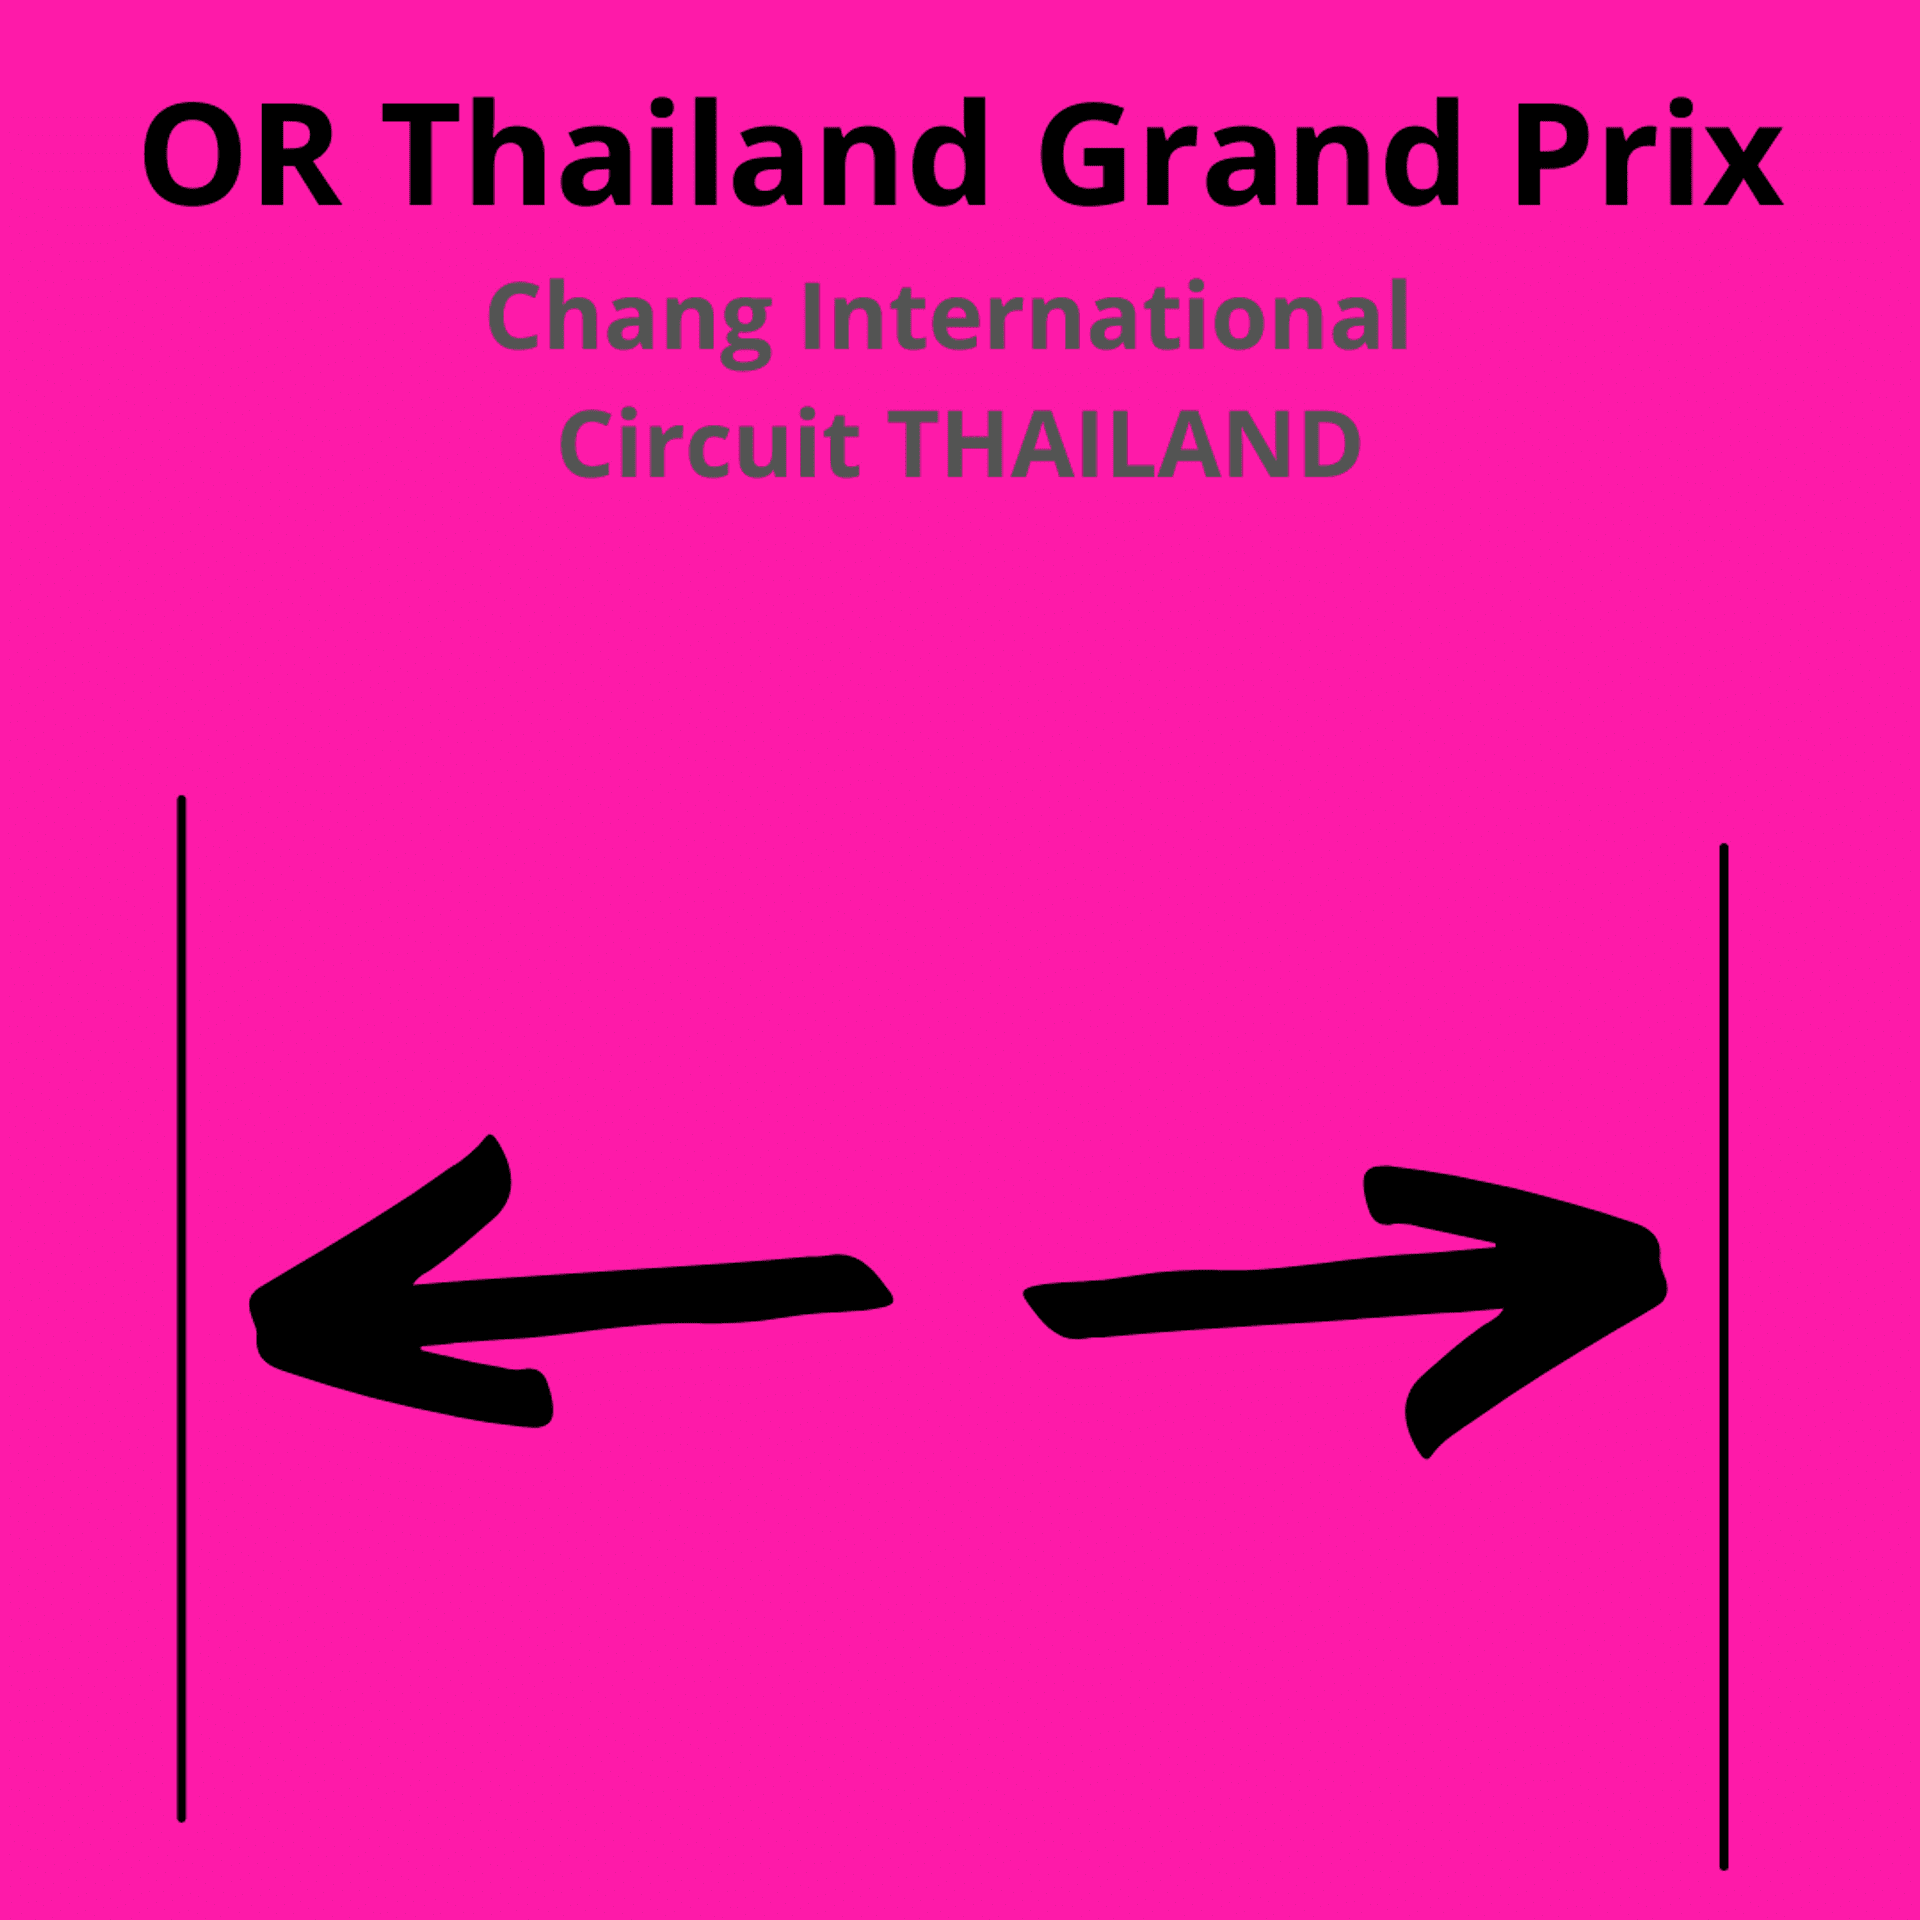 OR Thailand Grand Prix Chang International Circuit. Larghezza